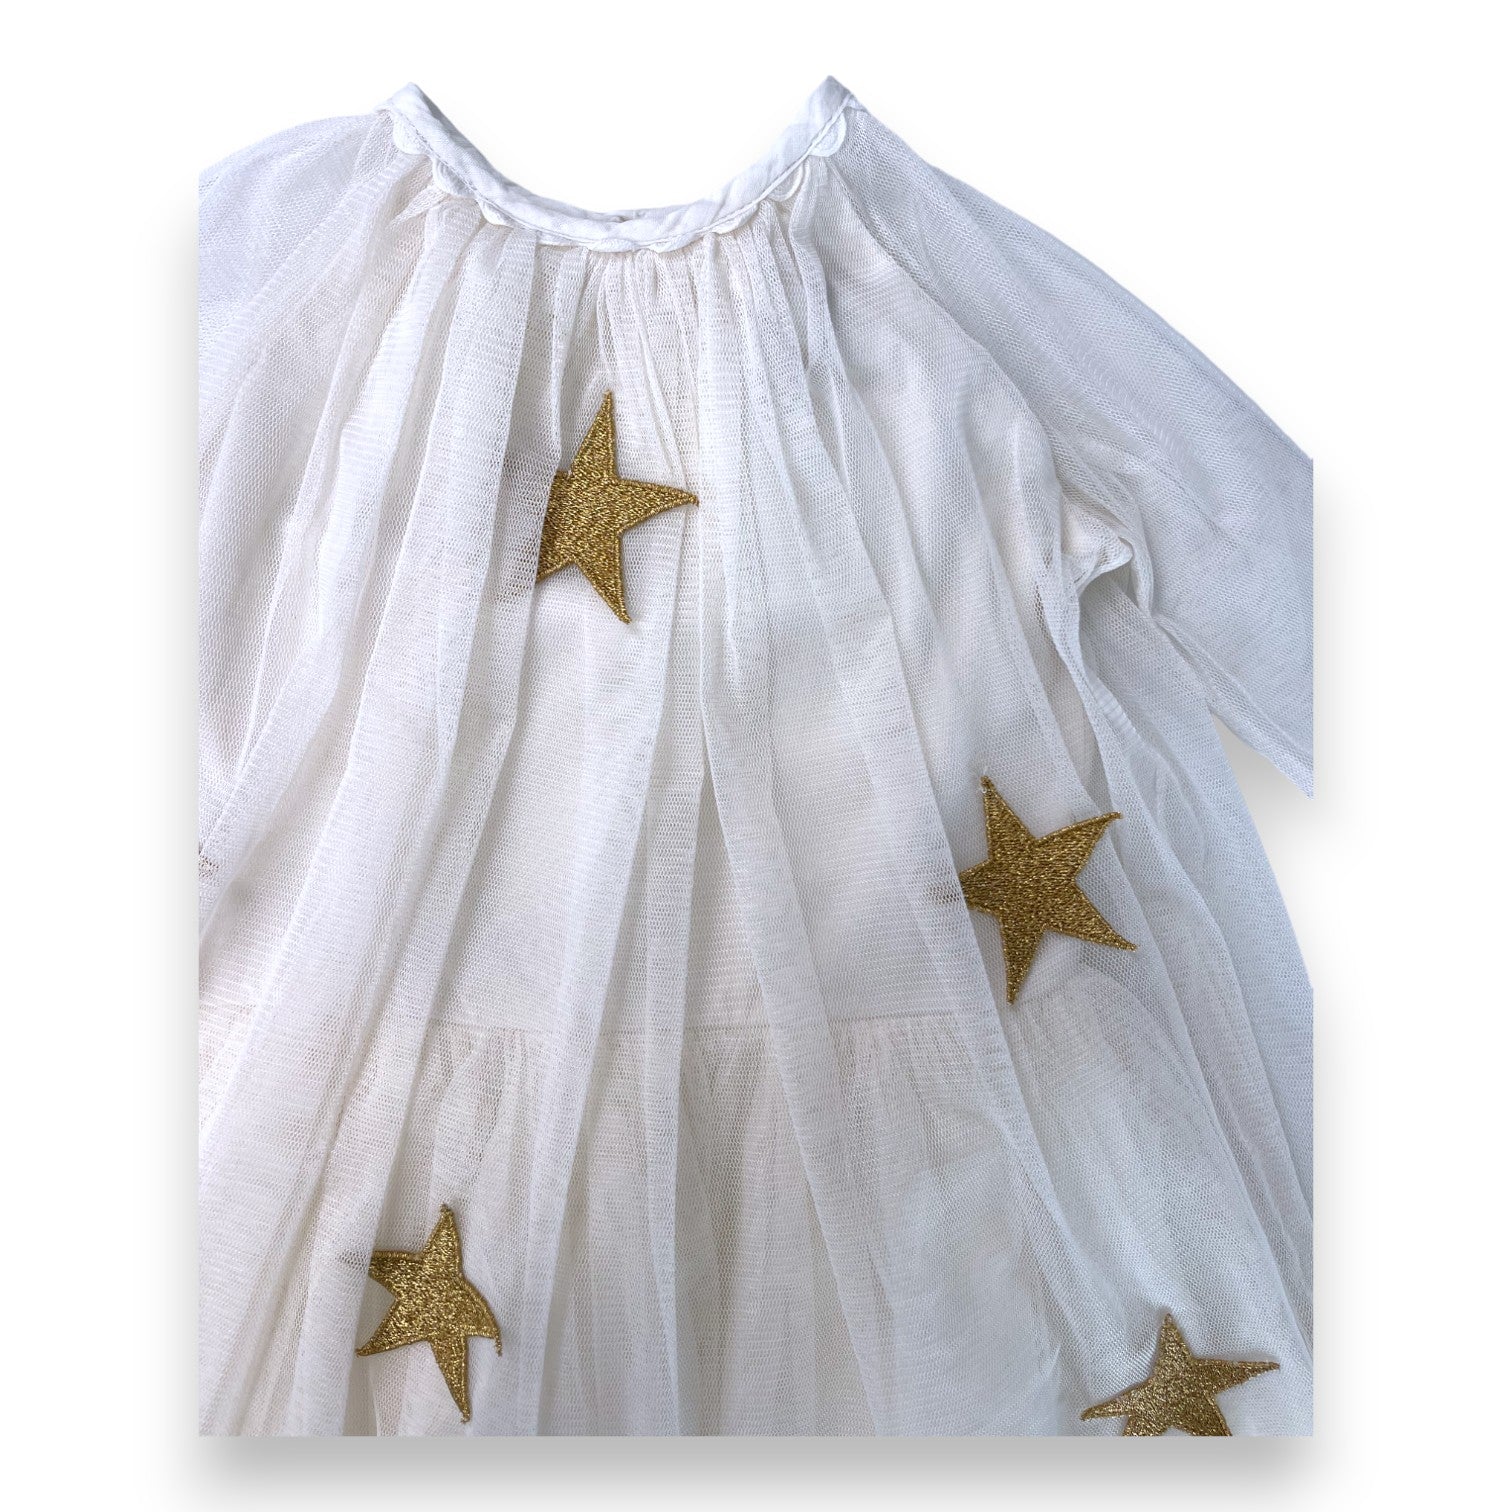 STELLA MCCARTNEY - Robe tulle étoiles dorées - 6 mois